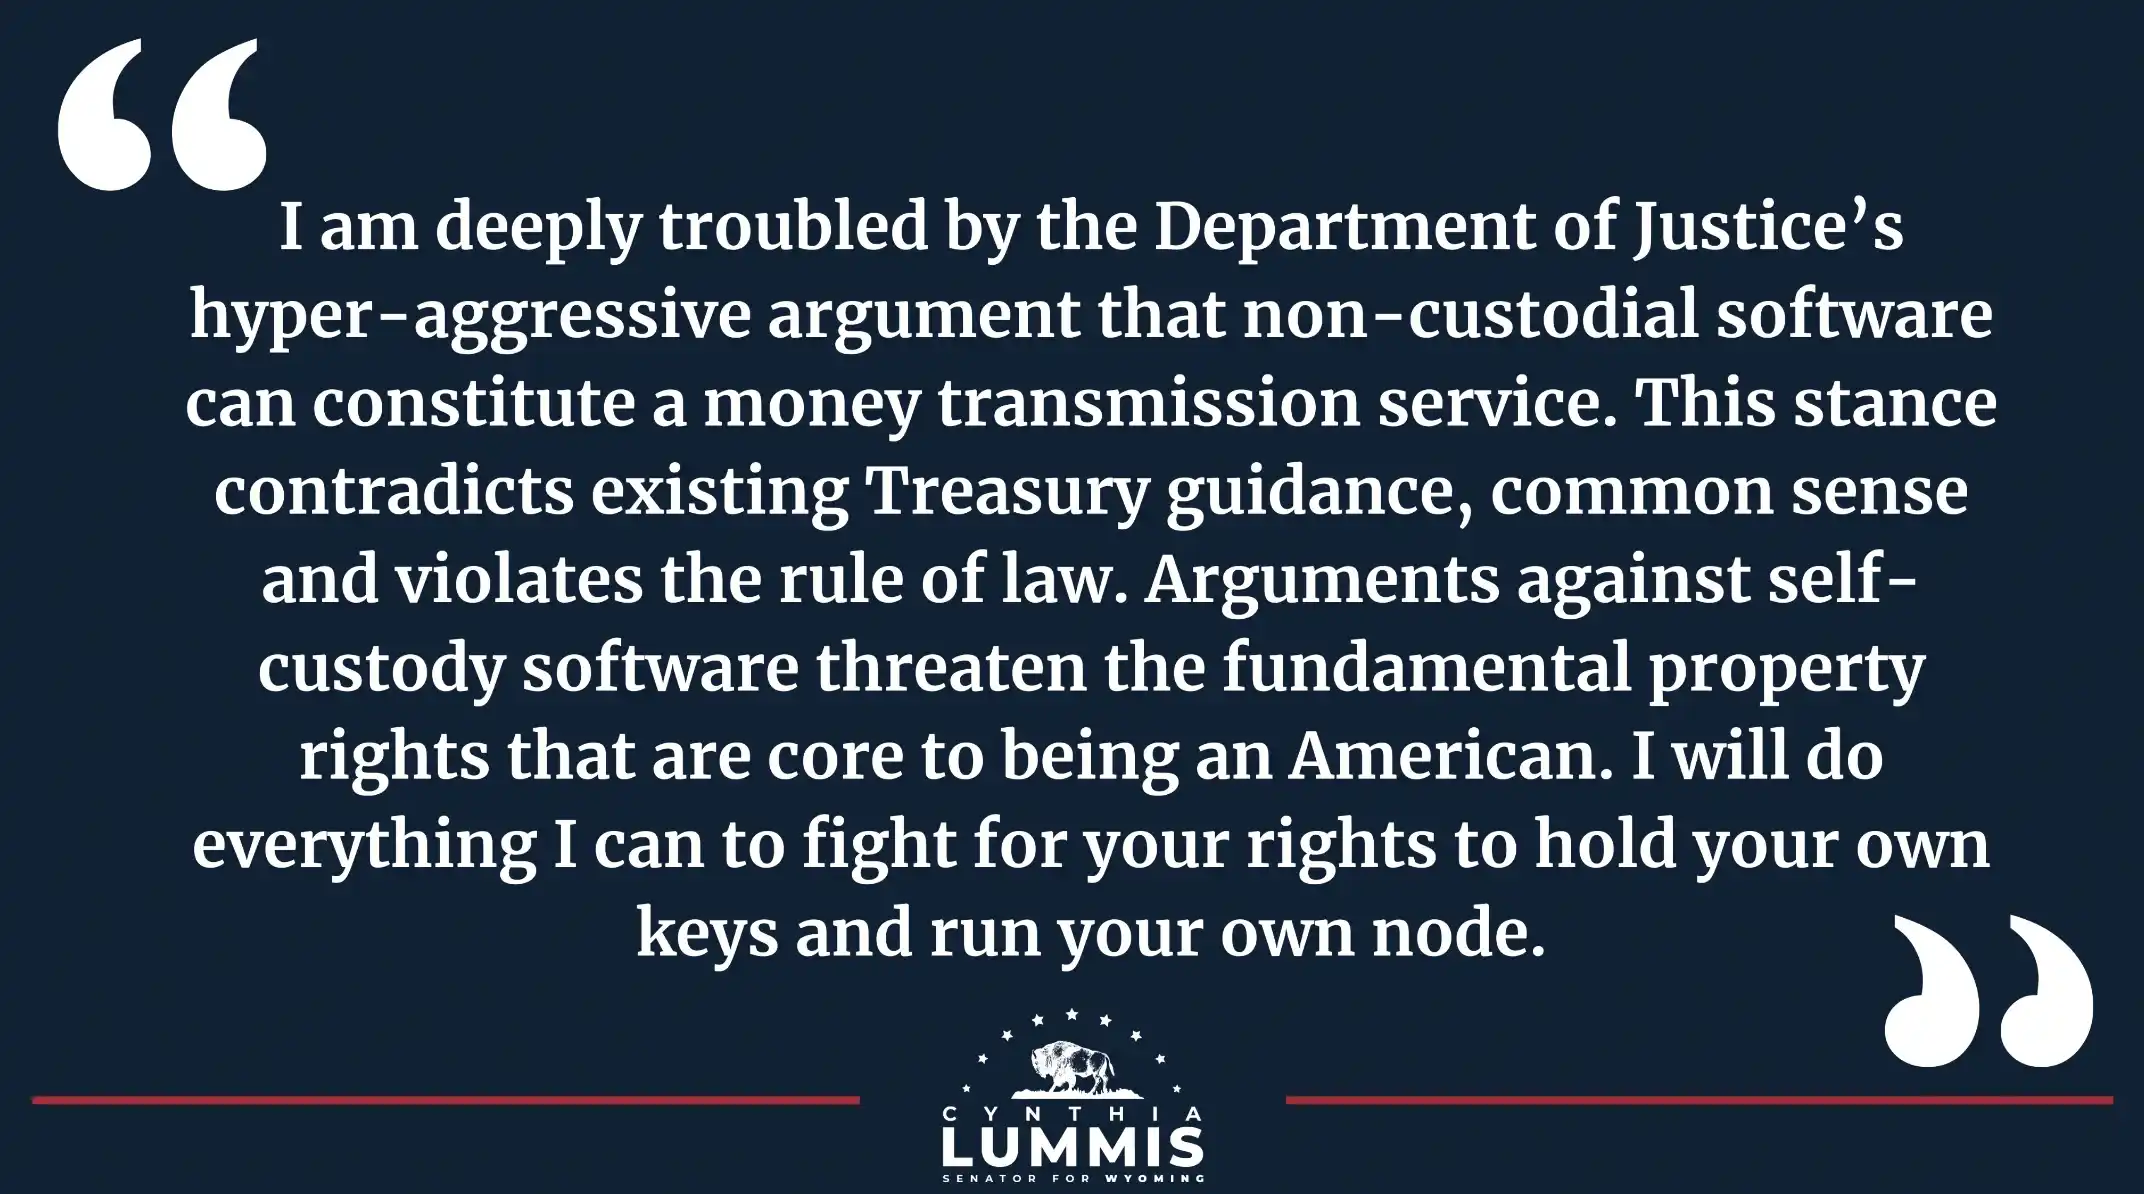 Senator Lummis on the Department of Justice